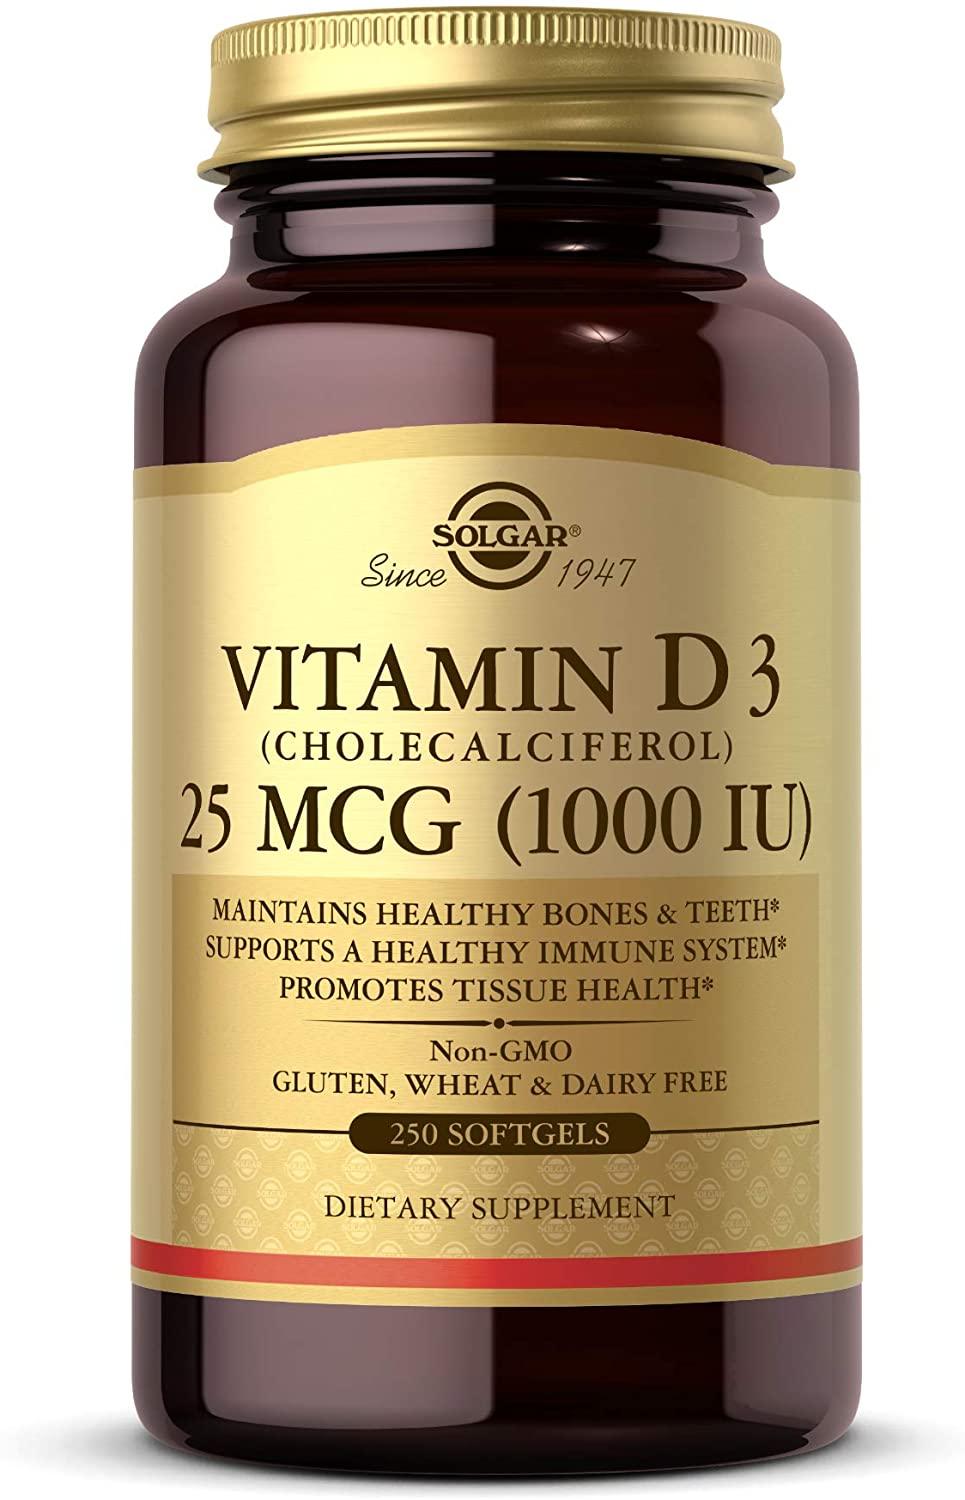 Solgar Vitamine D3 (Cholecalciferol) 25 MCG (1000 IU) - mondialpharma.com